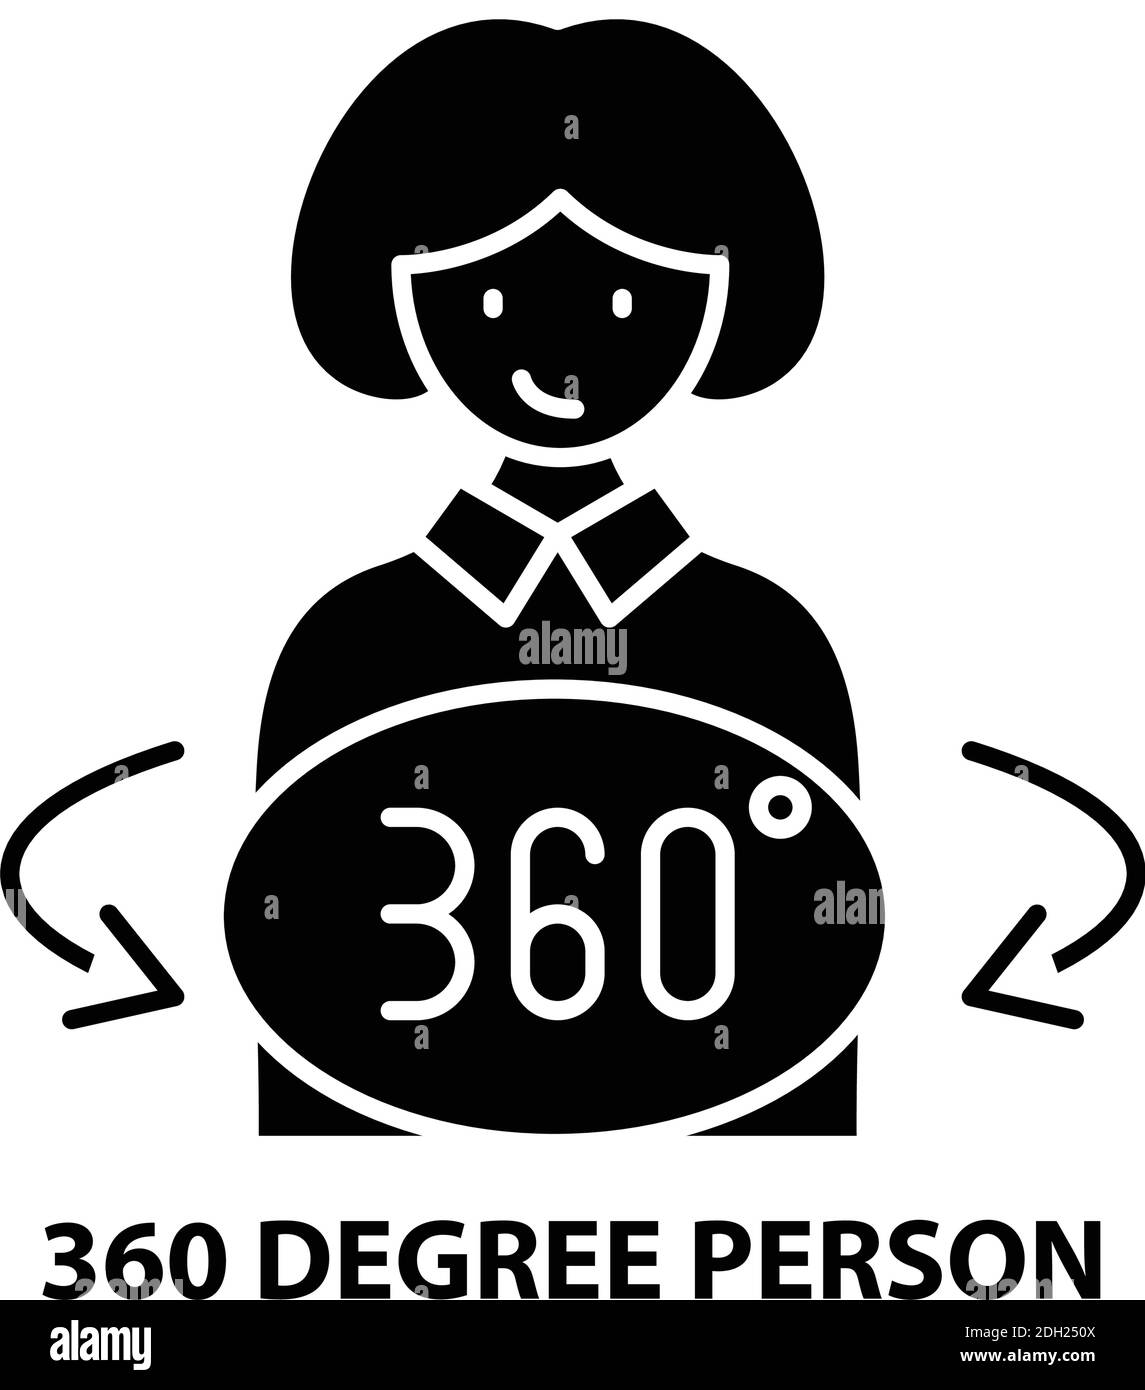 360 degree person icon, black vector sign with editable strokes, concept illustration Stock Vector